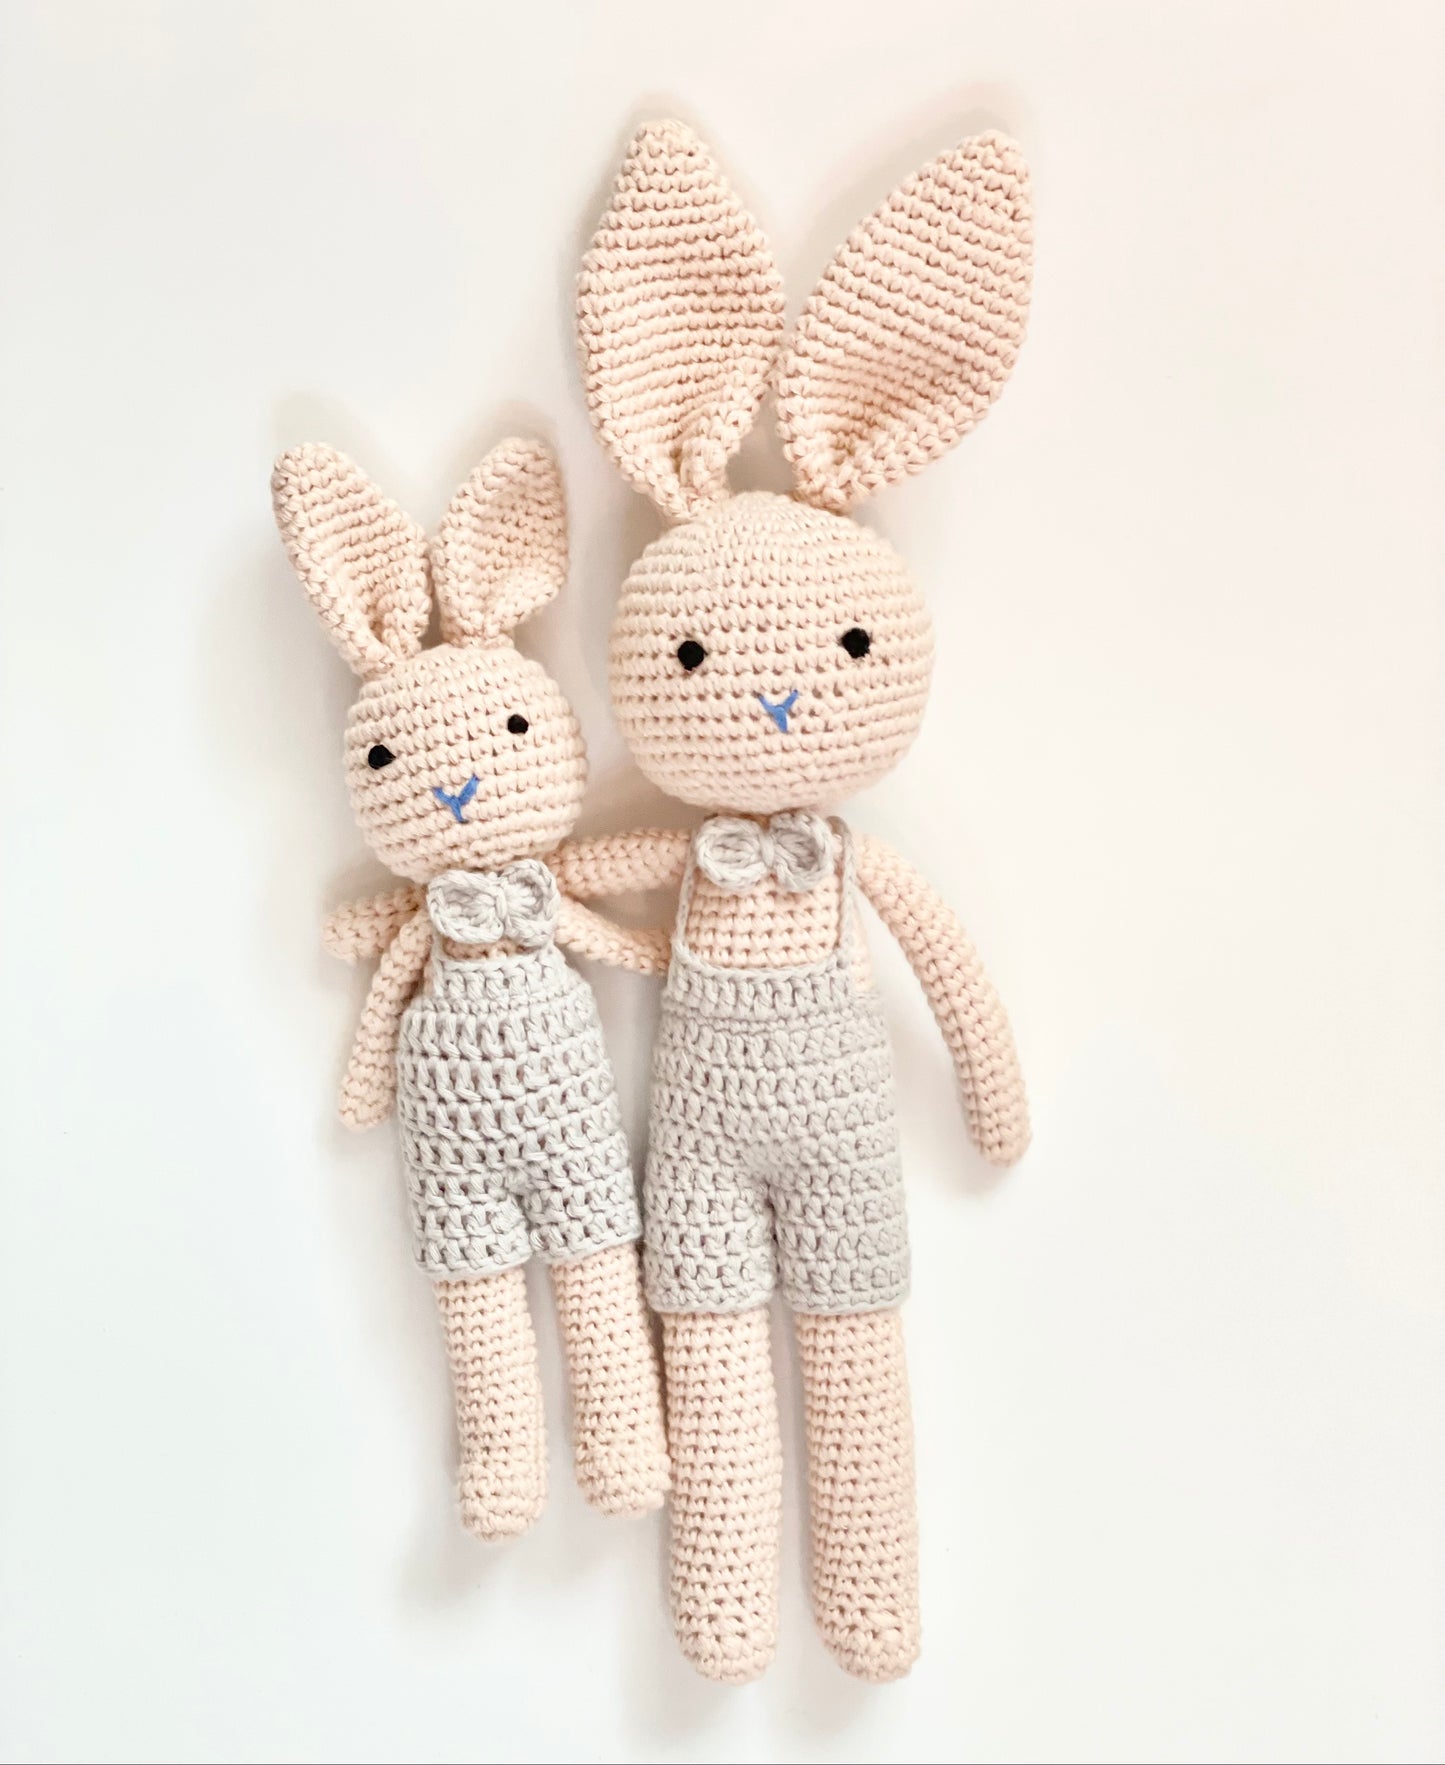 Crochet Bunny Doll in Gray Overalls